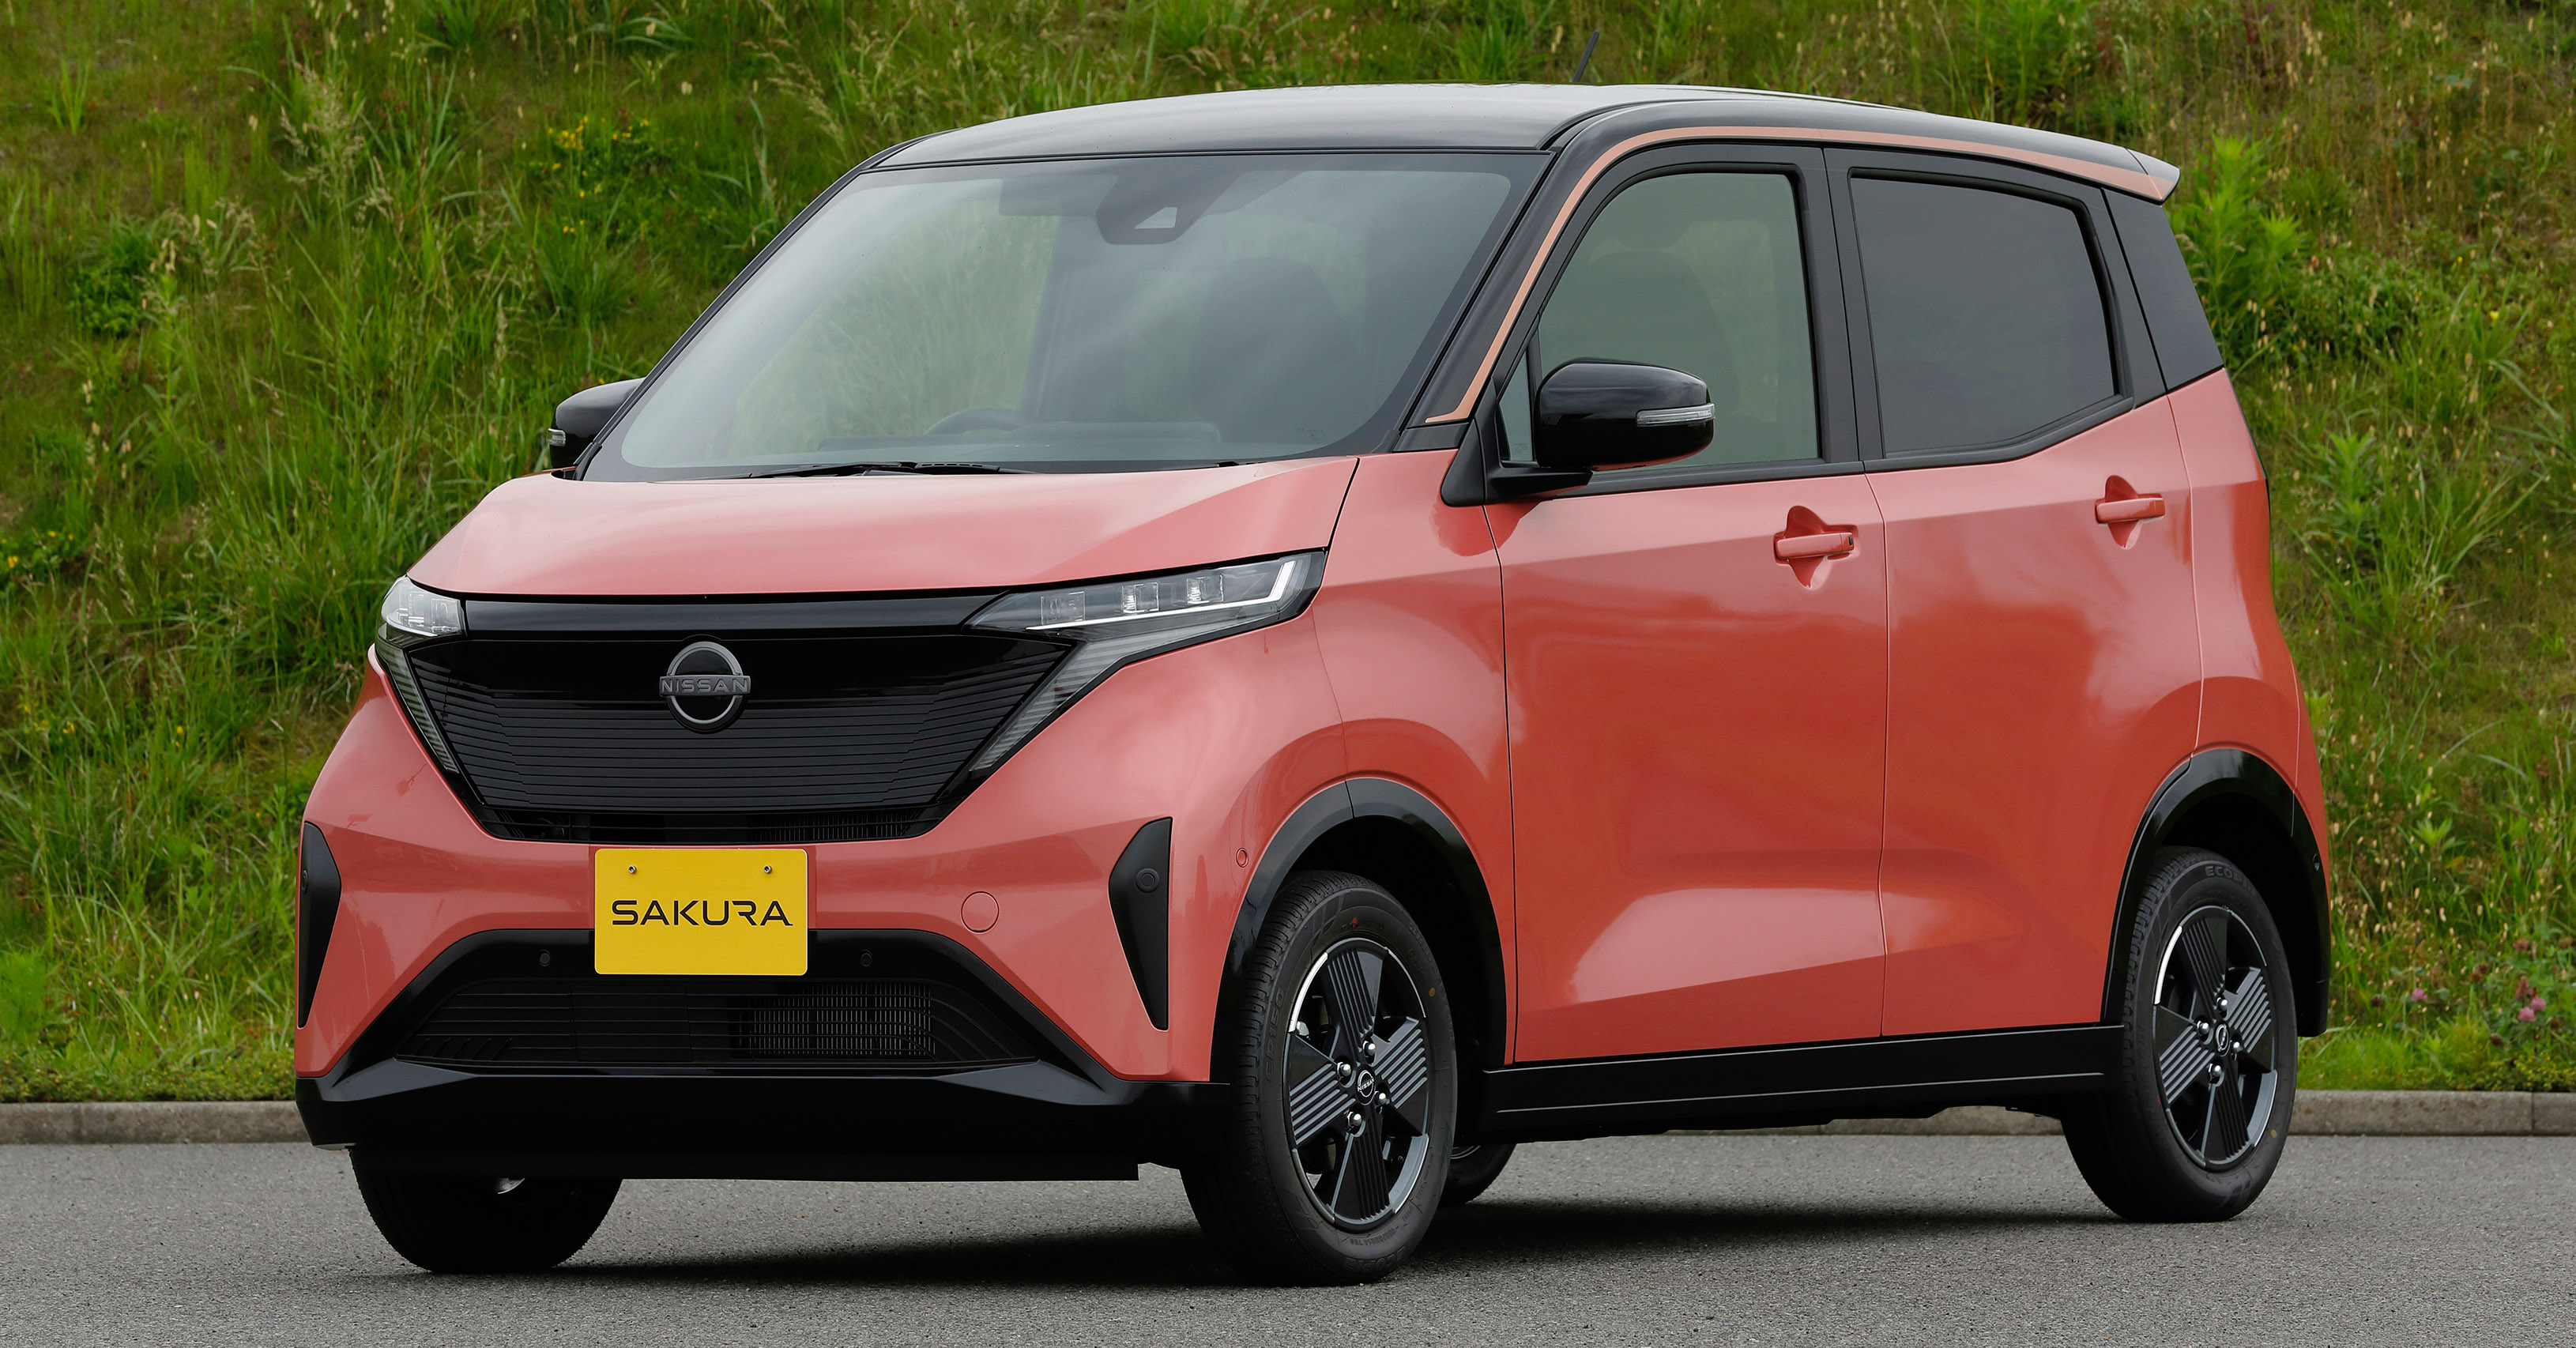 Nissan Sakura debuts - brand's first kei EV has a 20 kWh battery